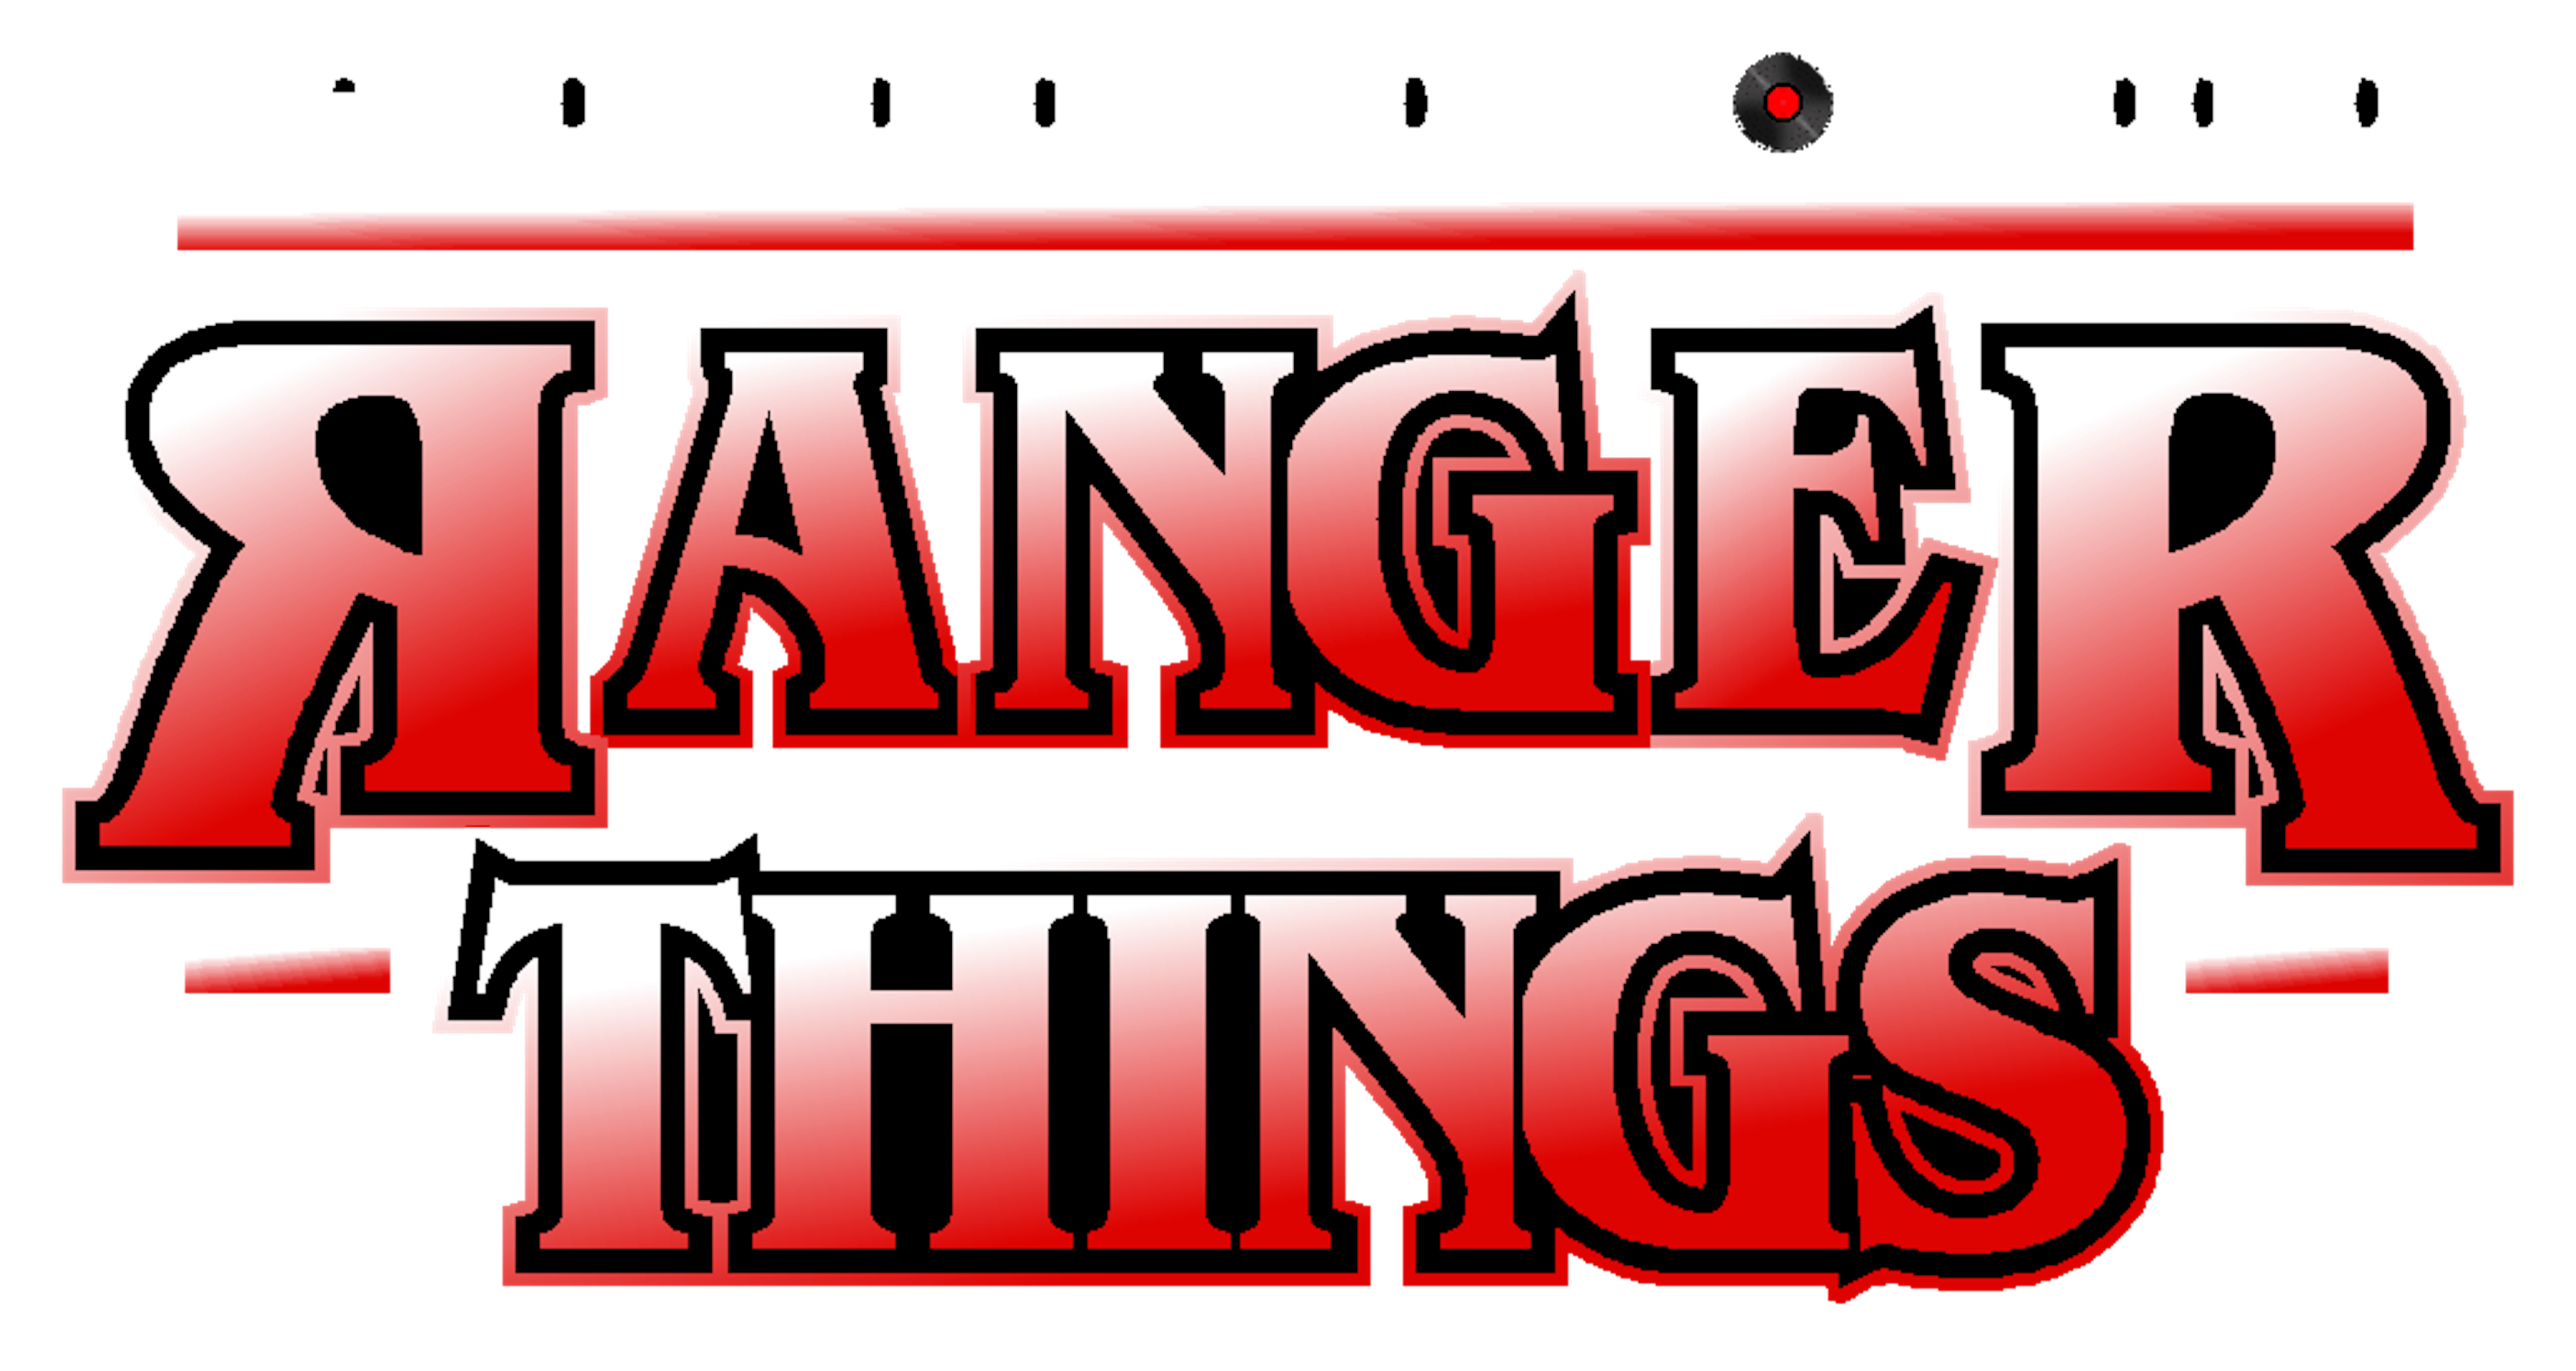 Ranger Things cover band logo